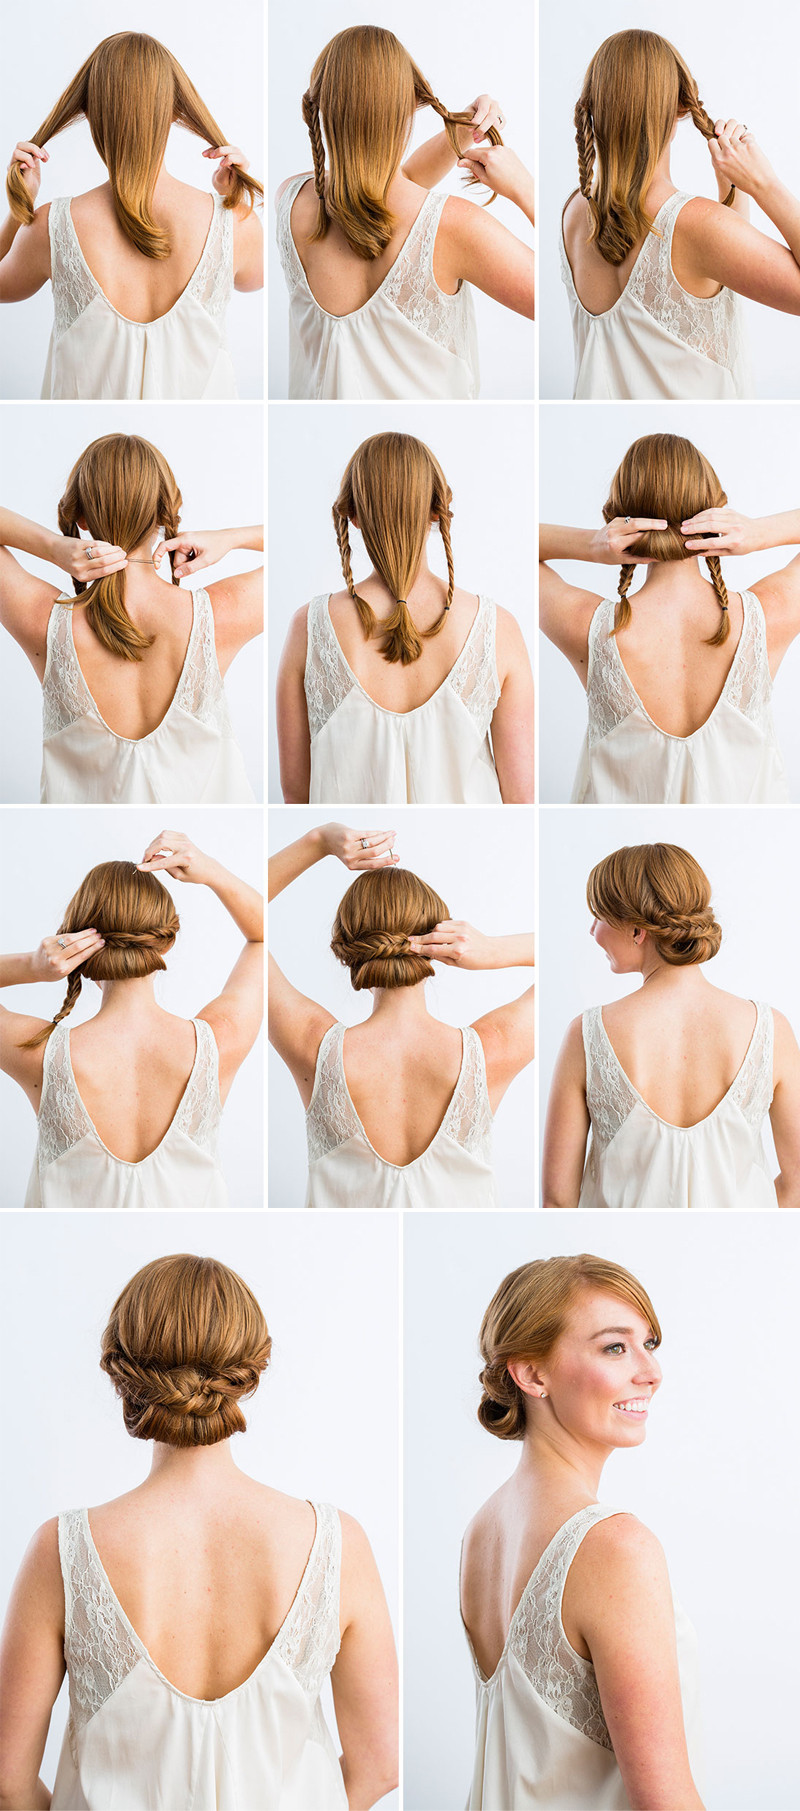 DIY Braid Hair
 10 Best DIY Wedding Hairstyles with Tutorials